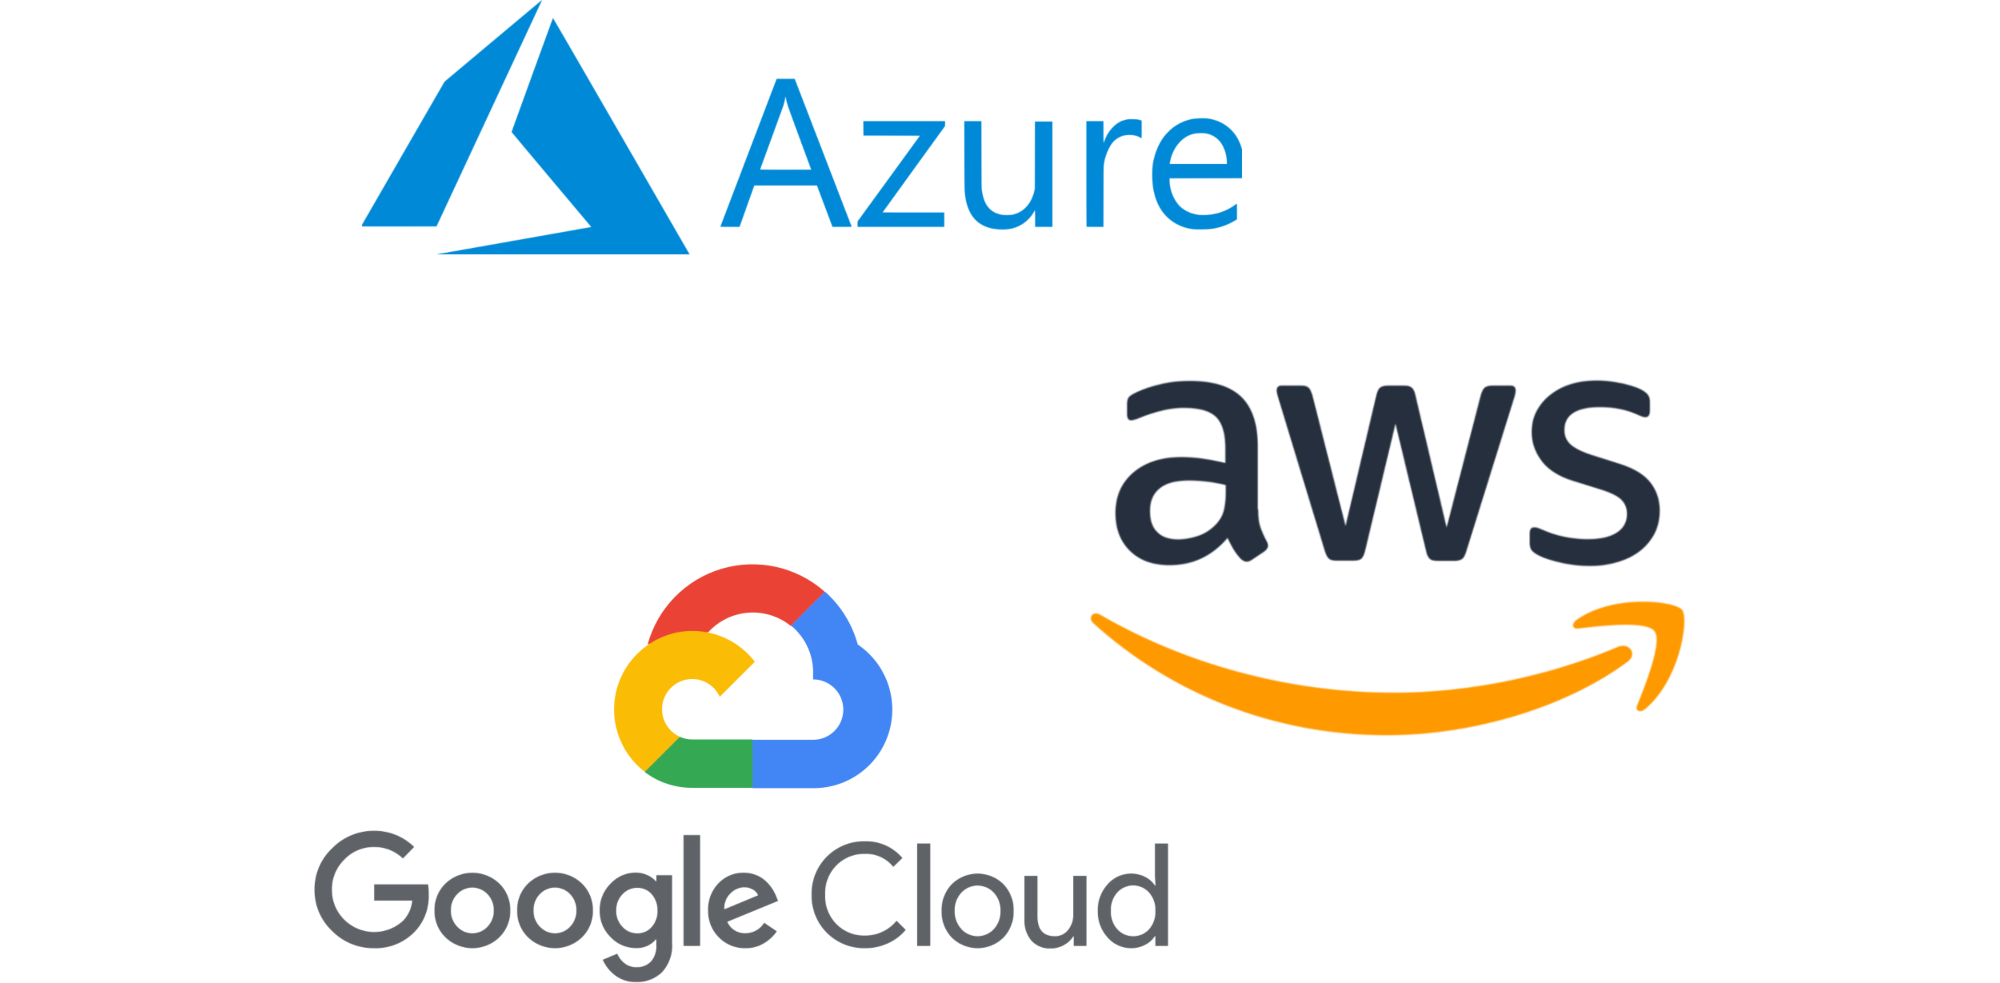 Azure Aws and Google cloud storage for DAM